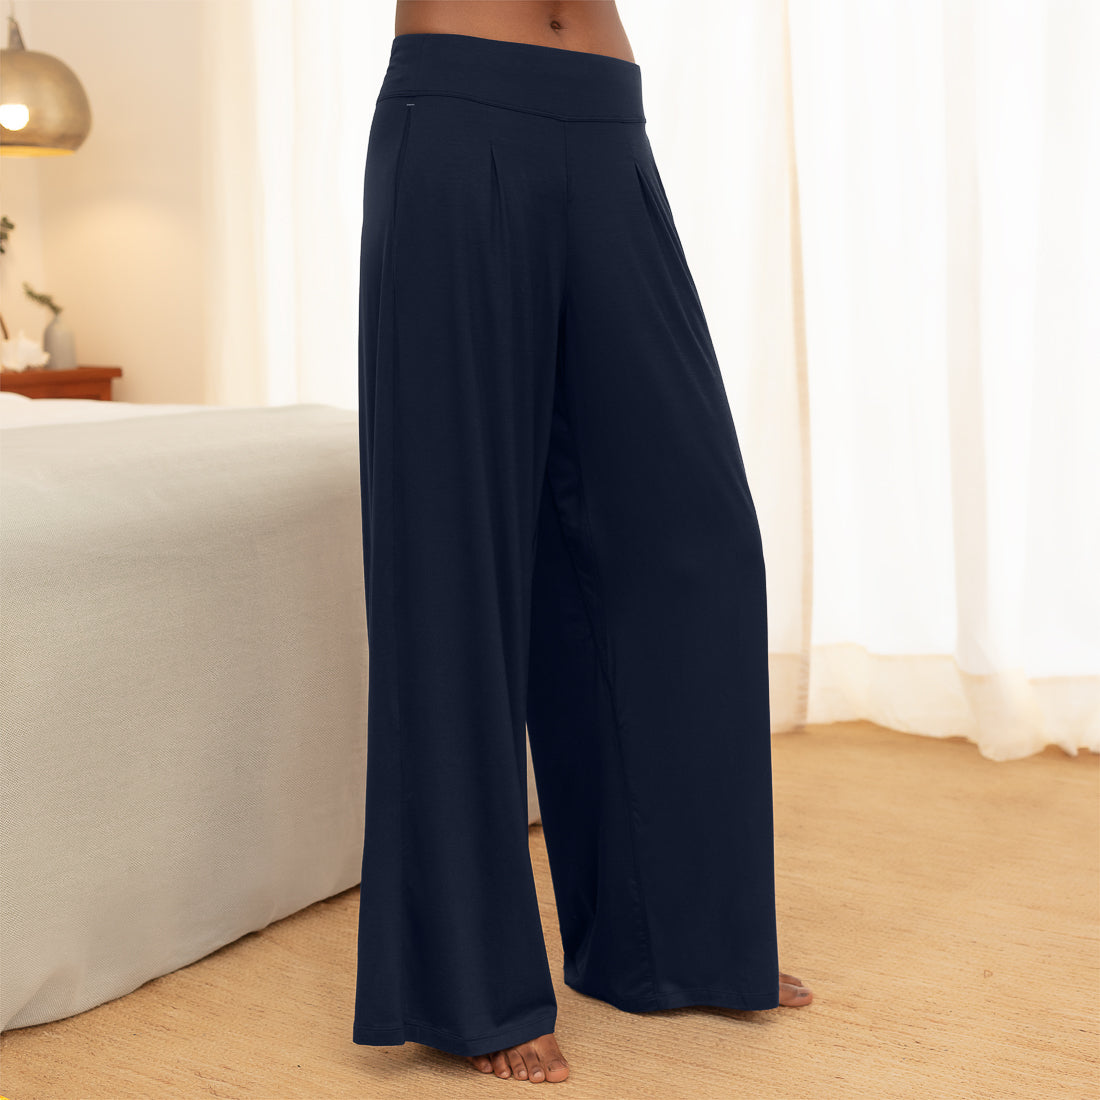 Women's cooling pajamas pants || Navy blue